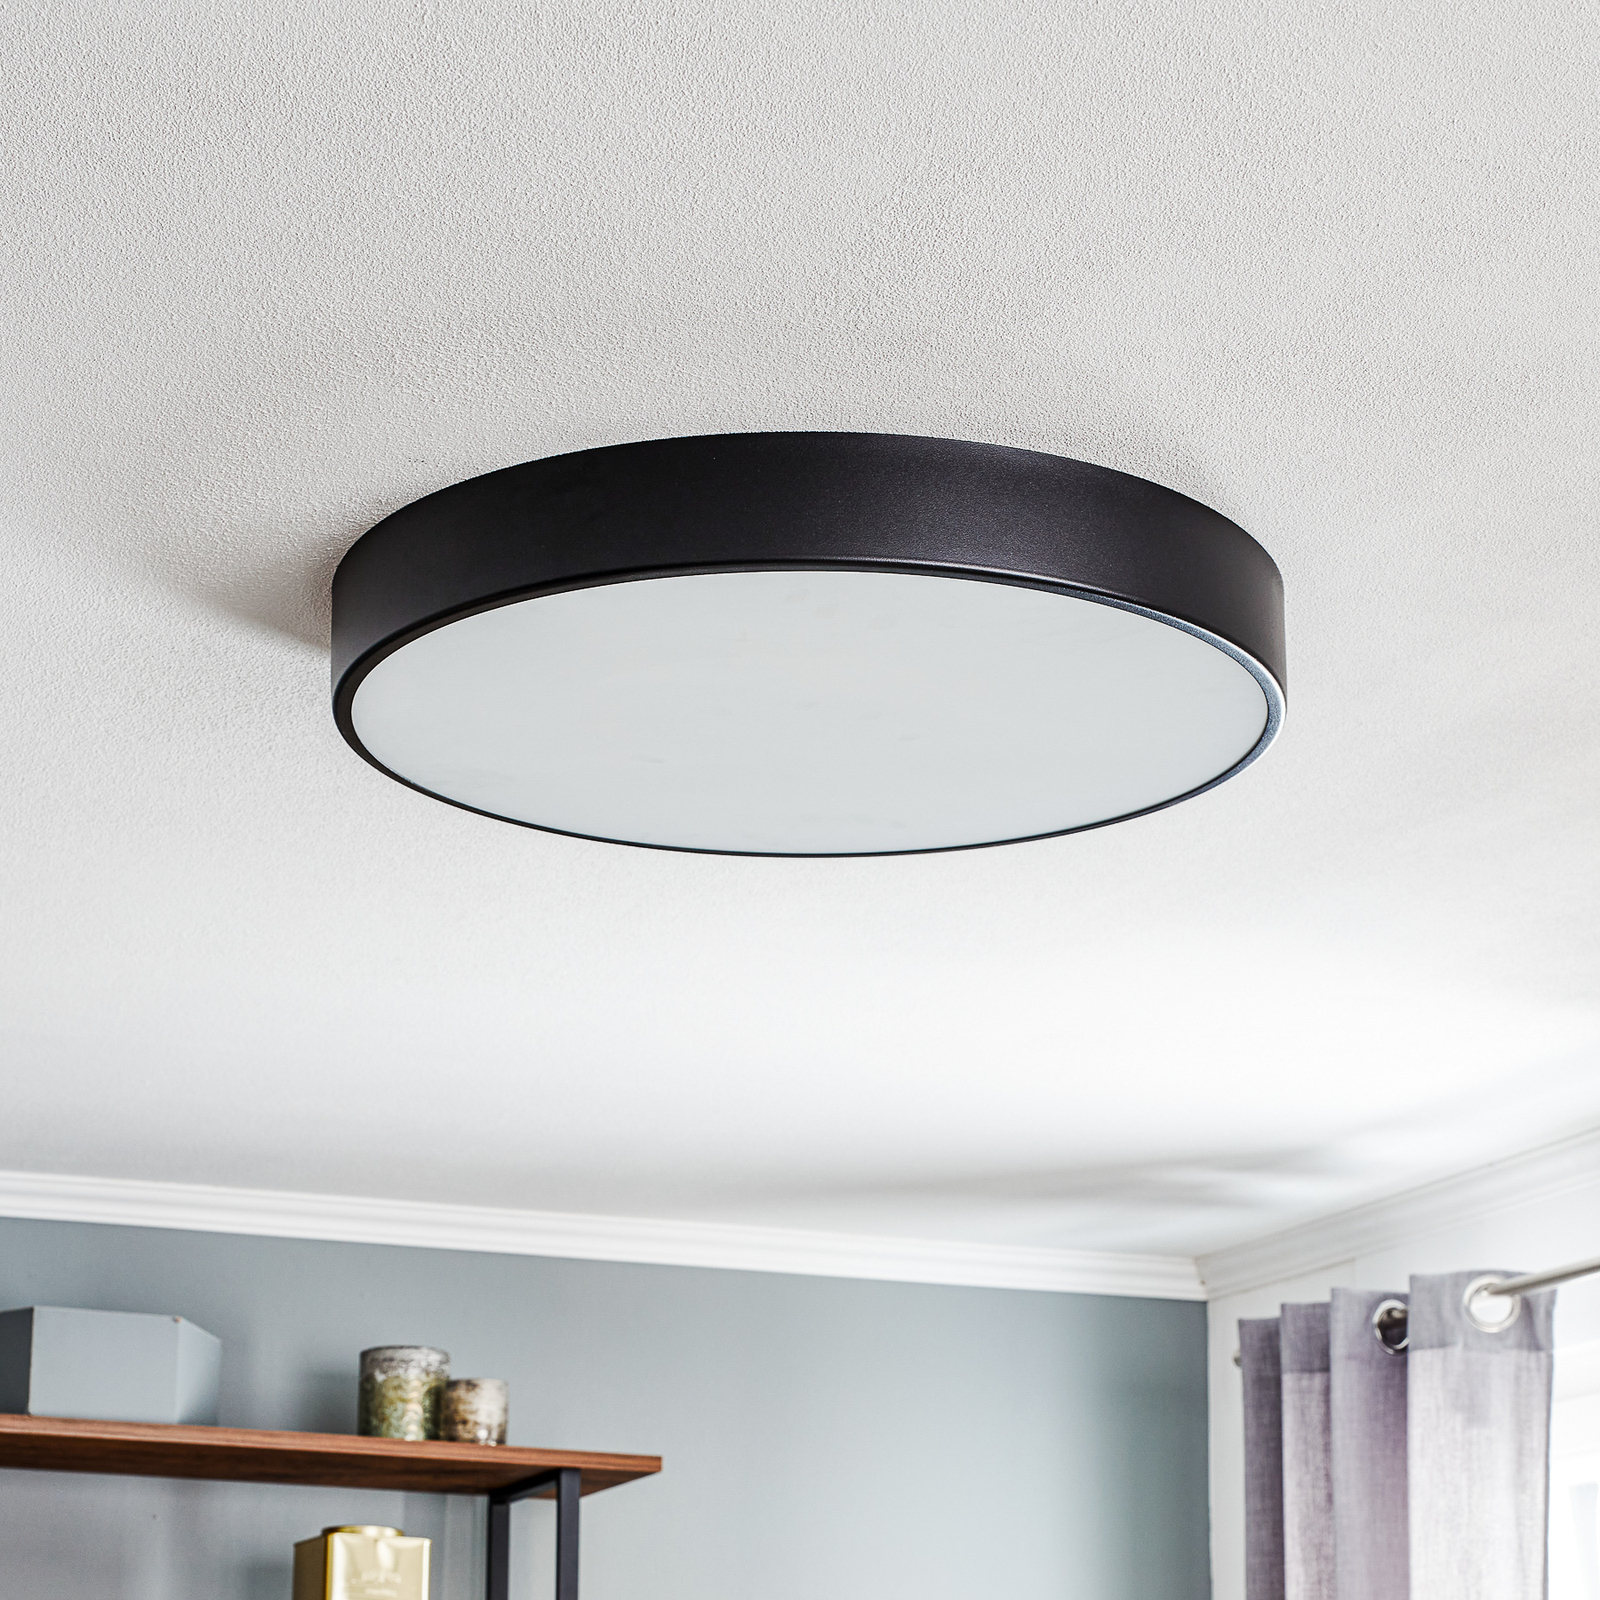 Cleo 600 ceiling light, sensor, Ø 60 cm black